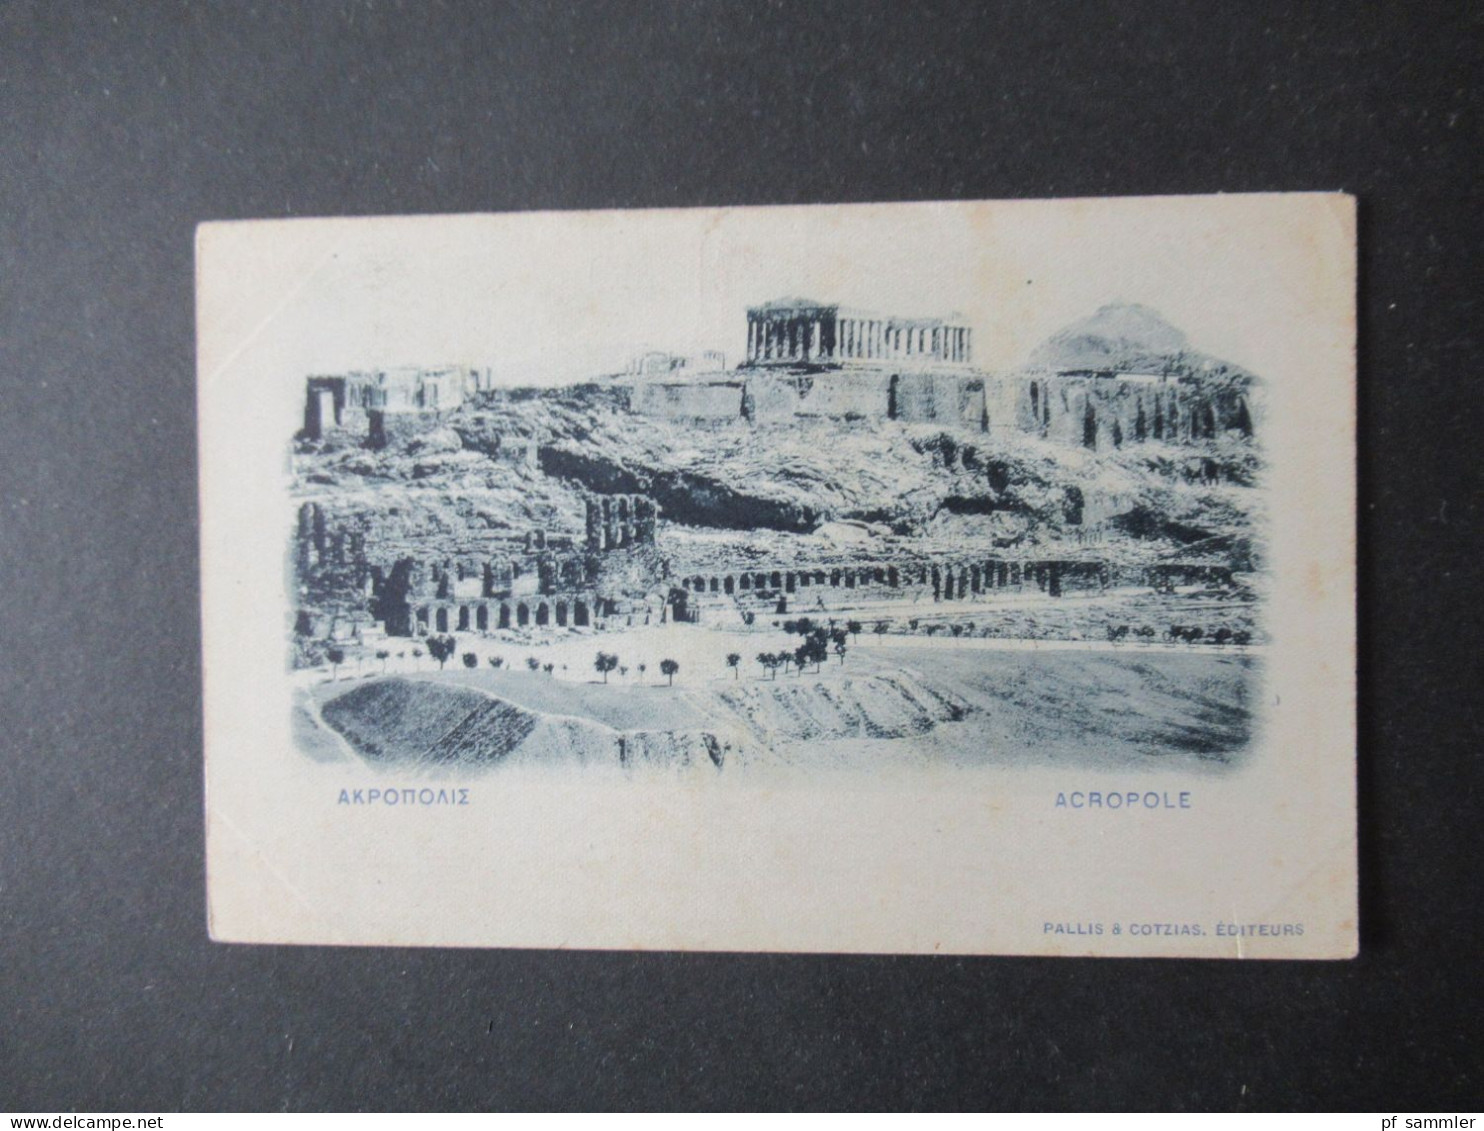 Griechenland Um 1900 Ganzsache Bild PK Carte Postale Reponse / Acropole Pallis & Cotzias Editeurs Ungebraucht! - Interi Postali